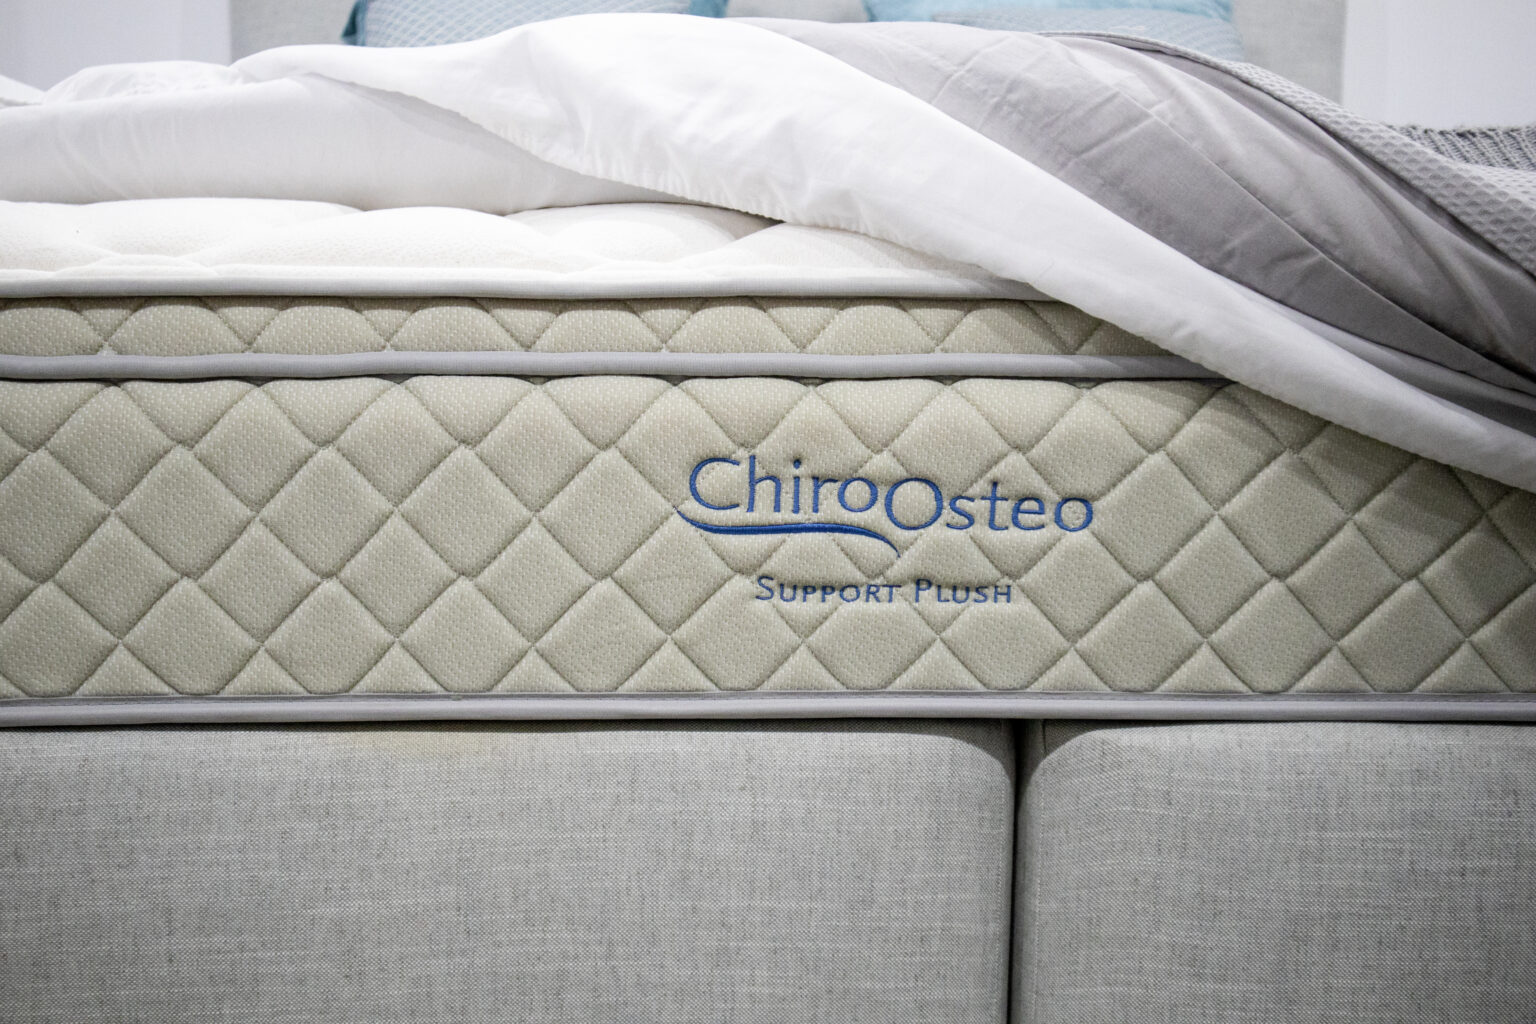 chiro osteo support ultra plush mattress review